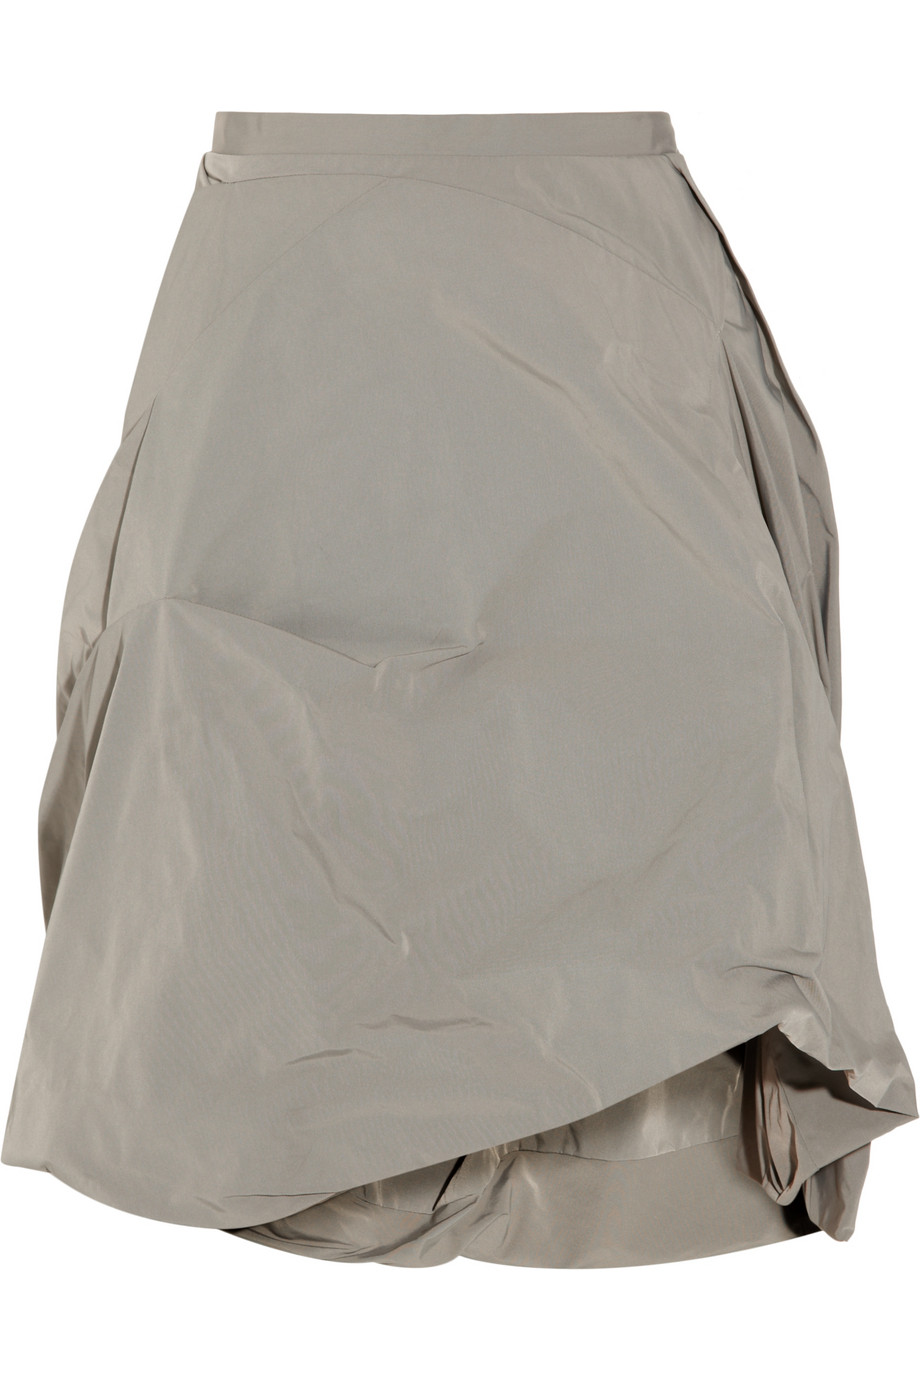 Marni Taffeta Bubble Skirt in Gray | Lyst